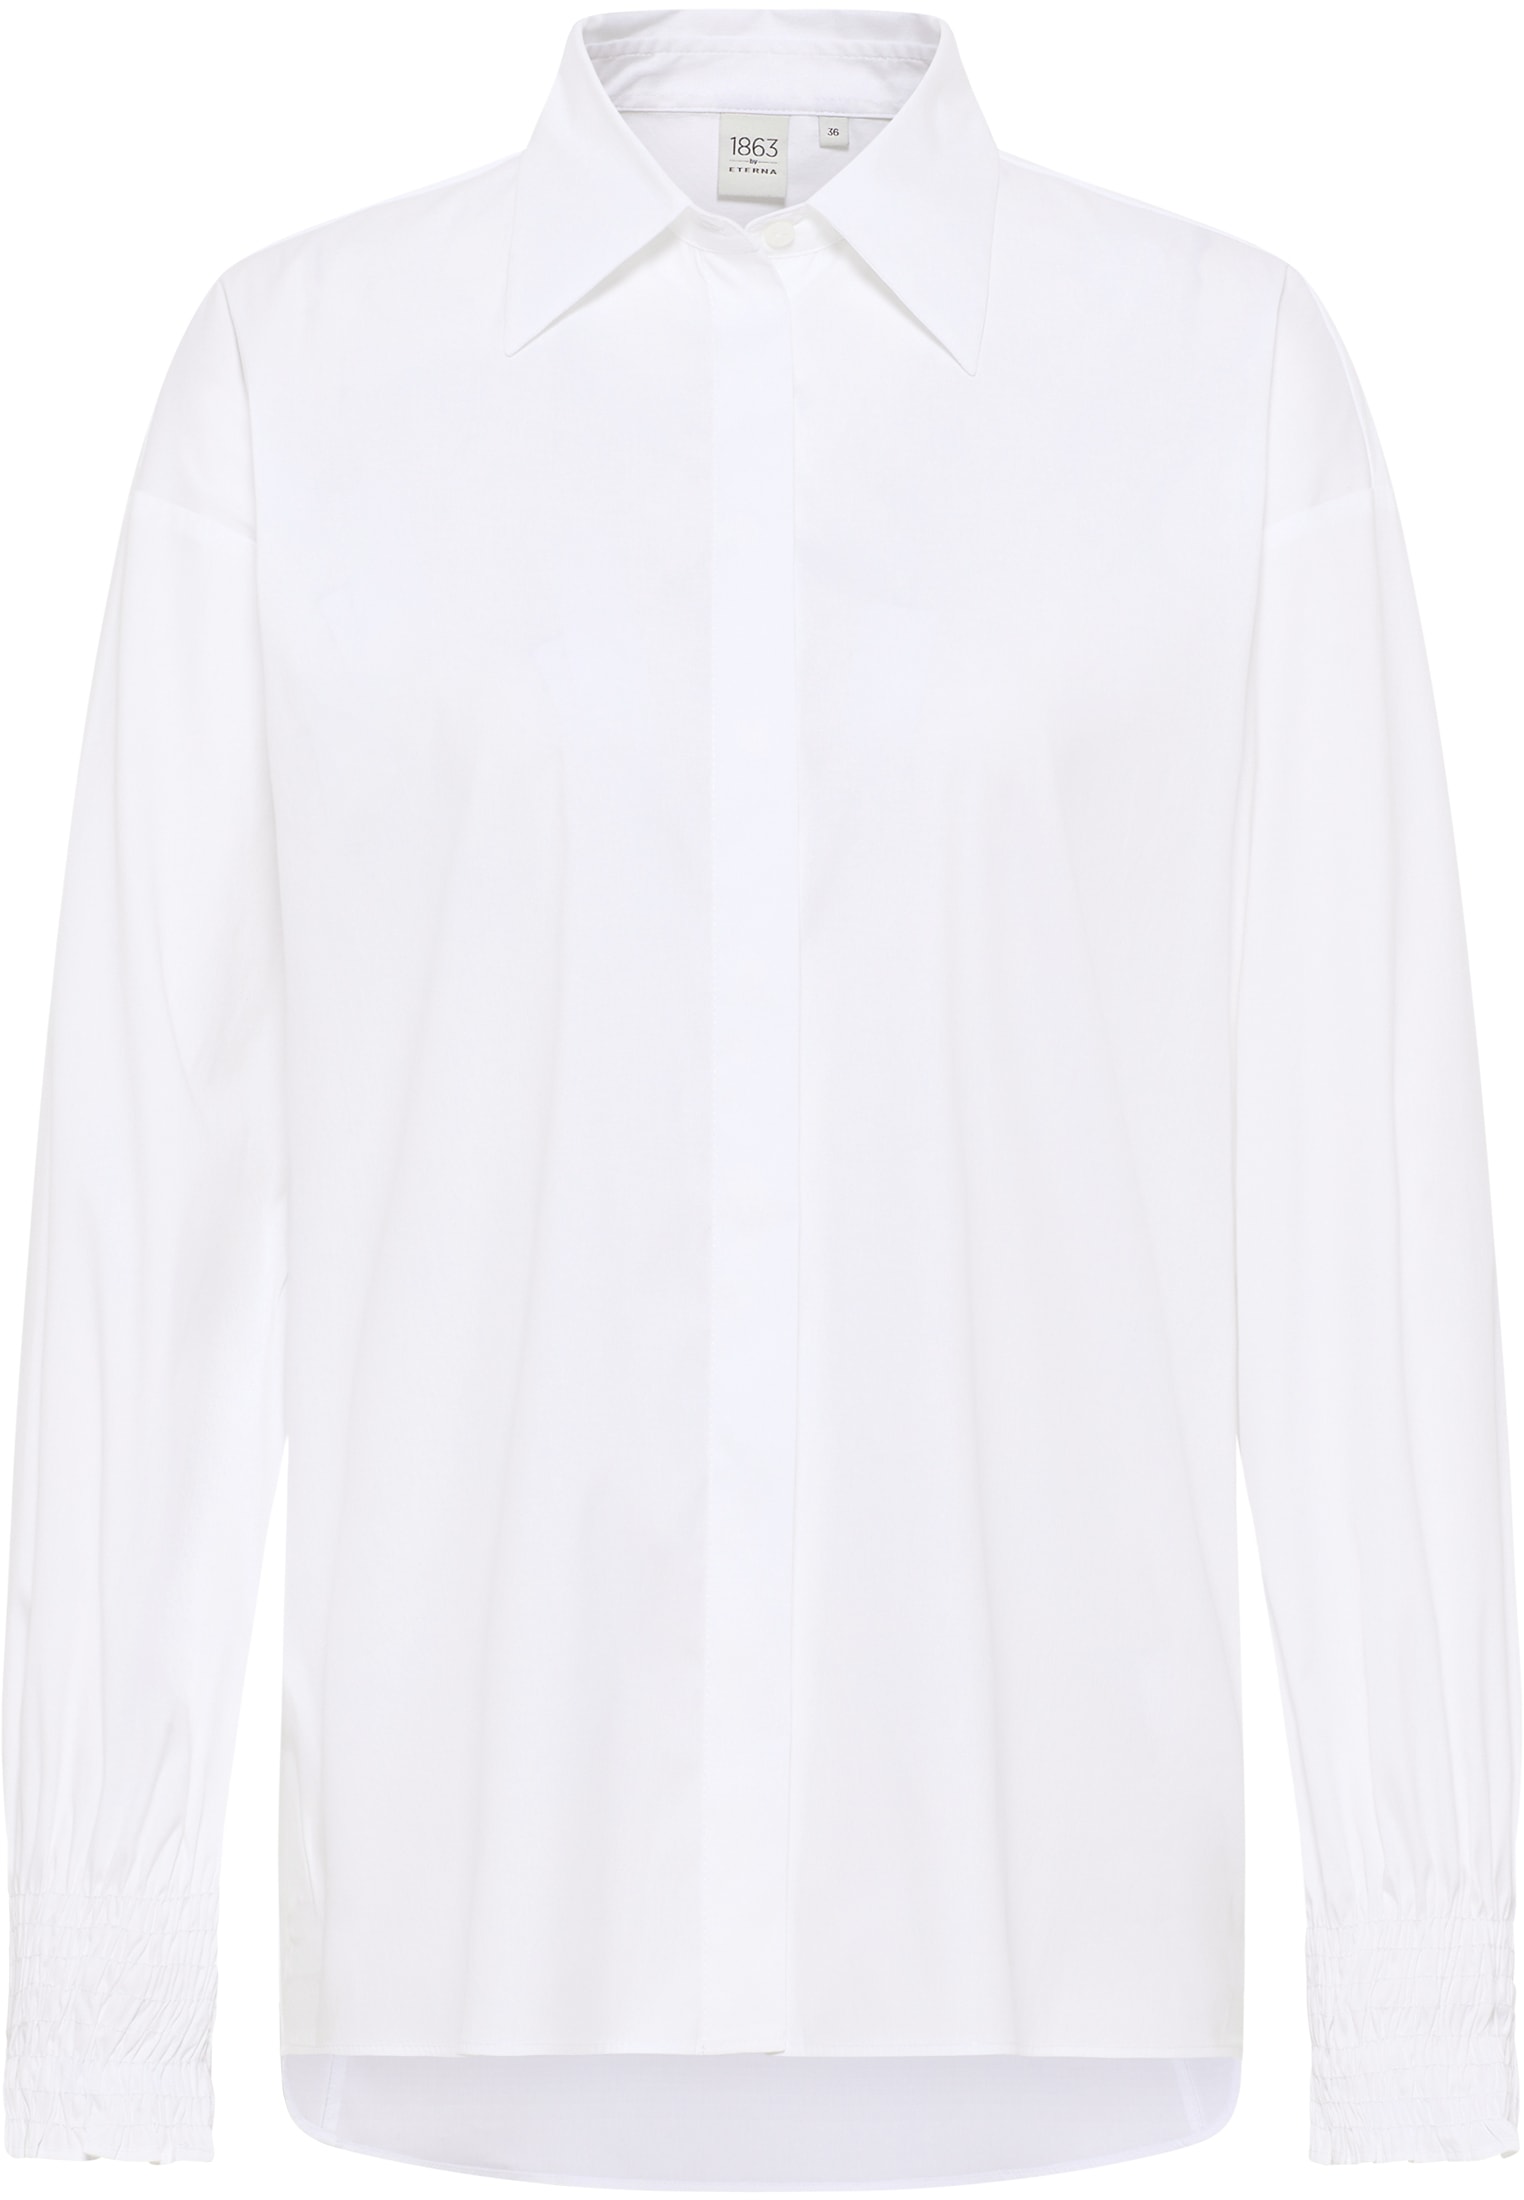 Signature Shirt Bluse in weiß unifarben | weiß | 46 | Langarm |  2BL04347-00-01-46-1/1 | Blusenshirts